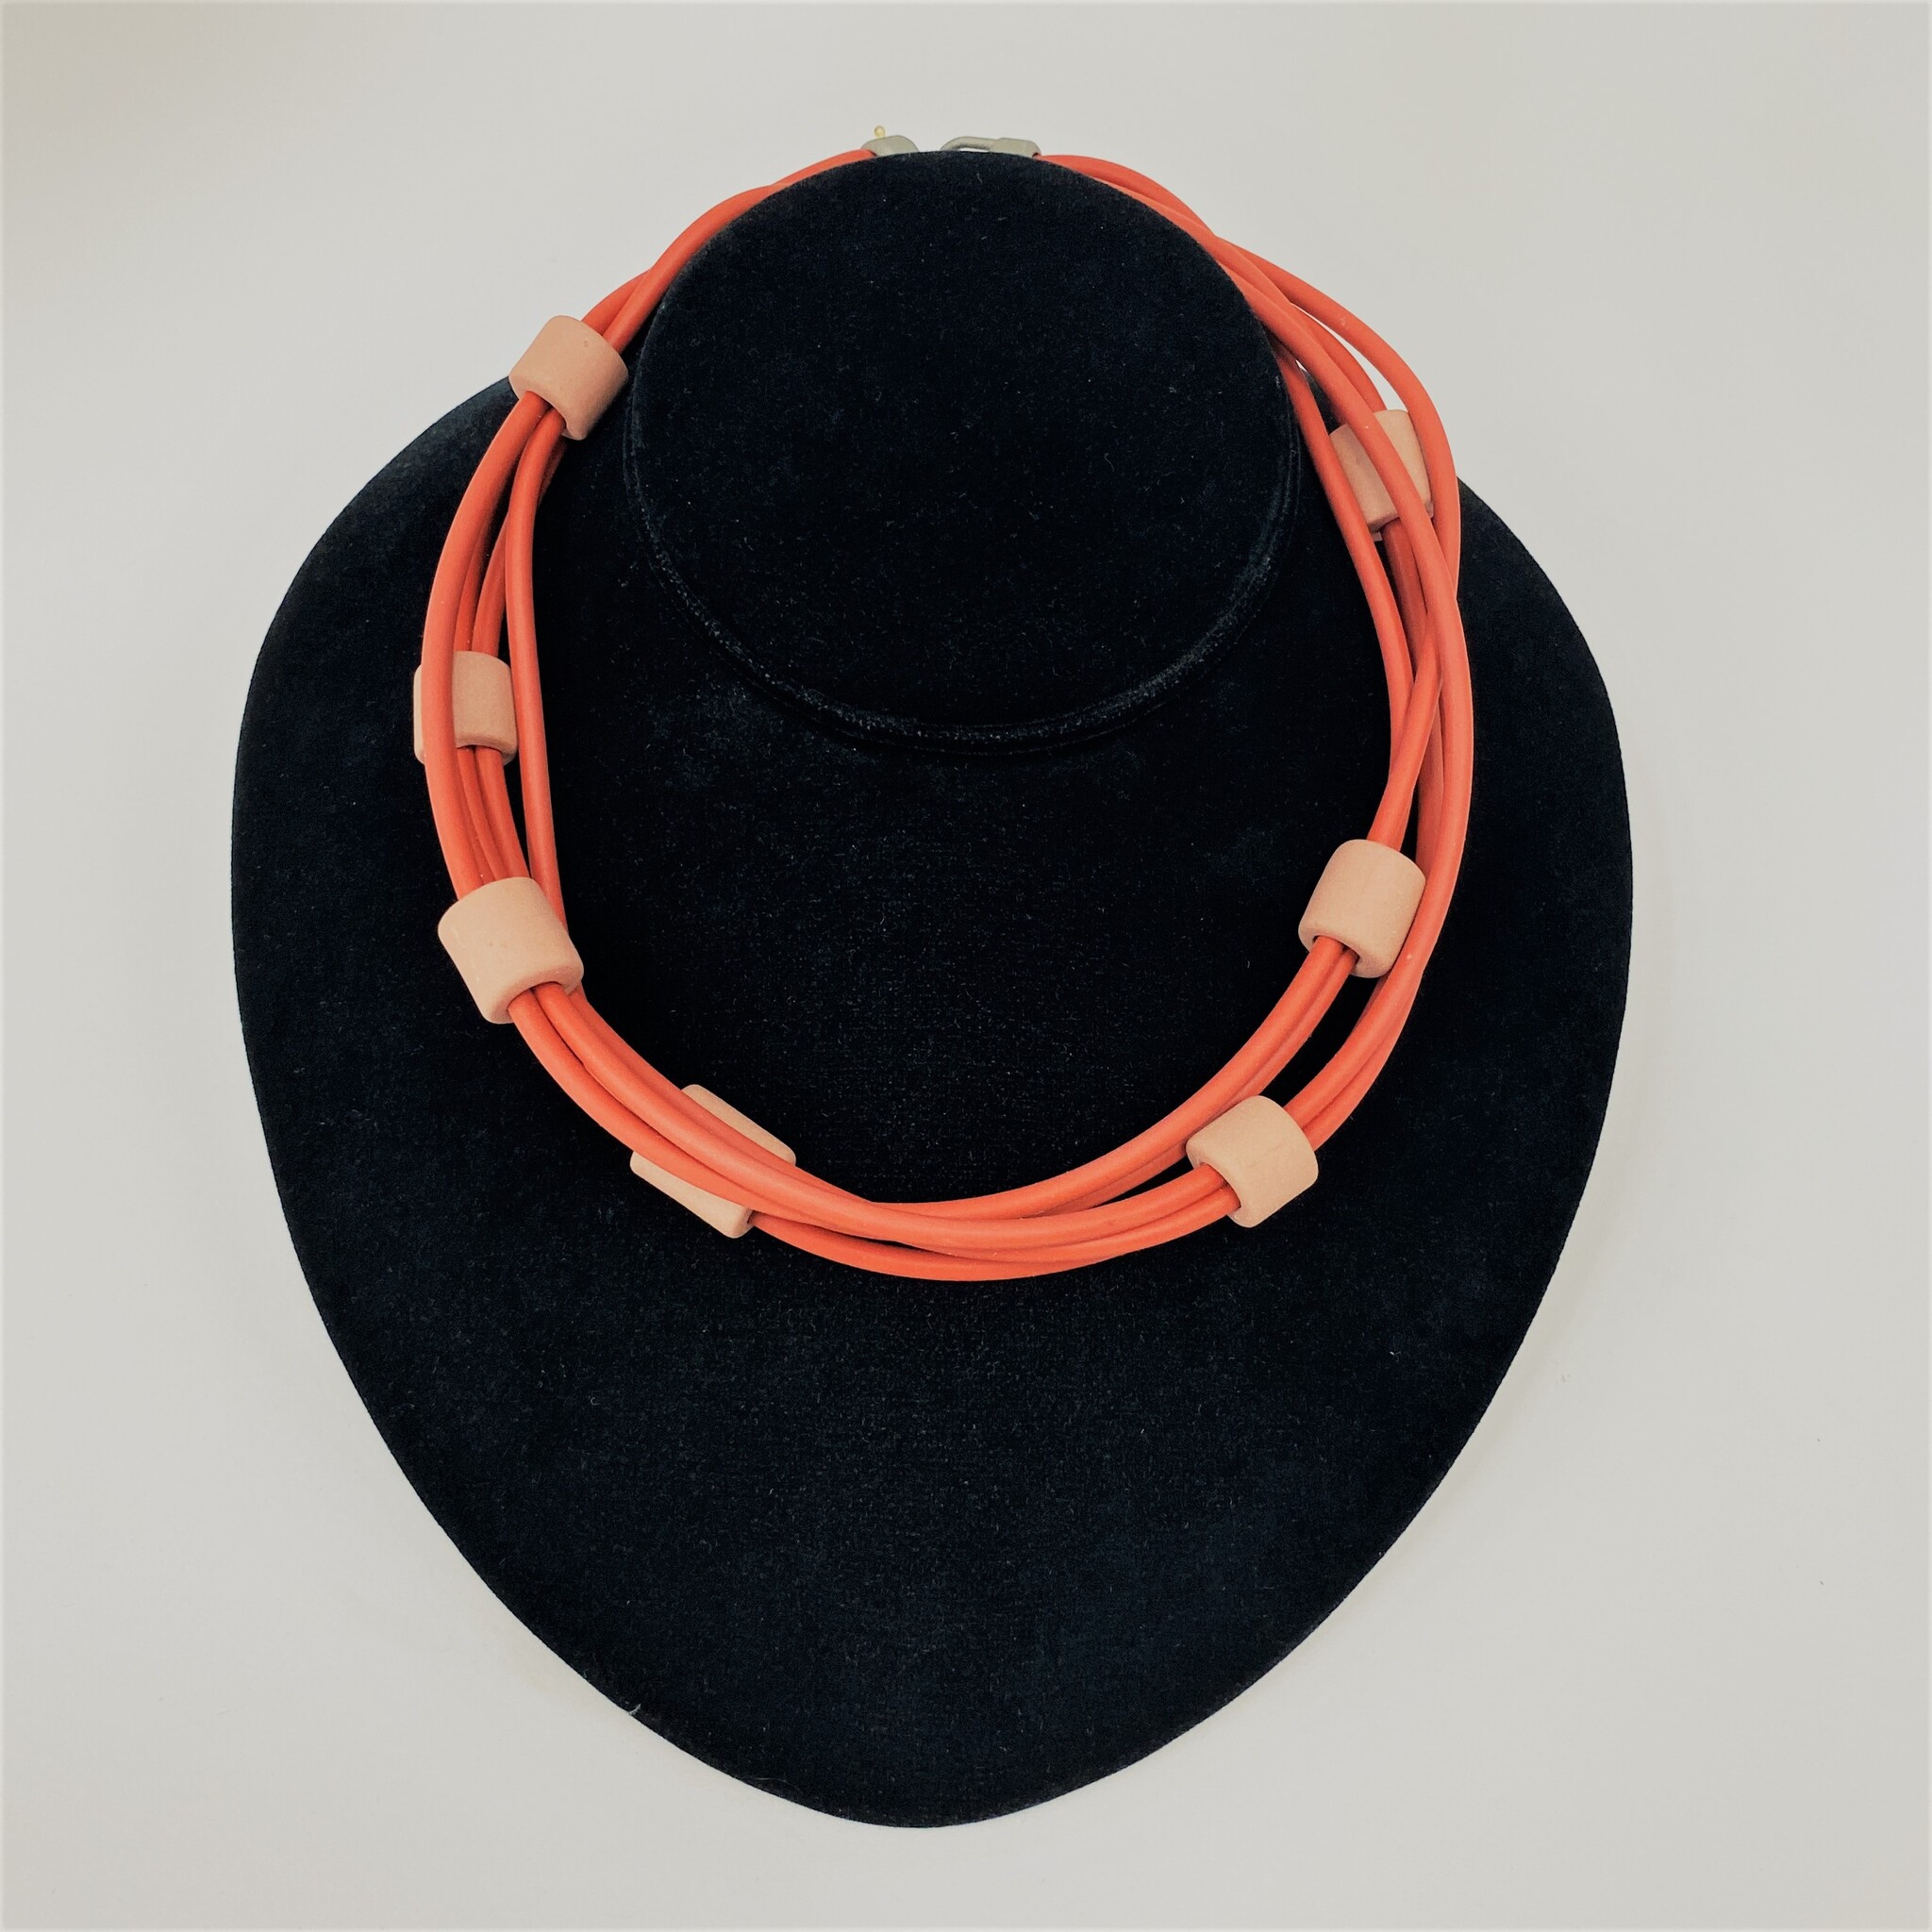 Maia Leppo Tubes Multi-Strand Necklace